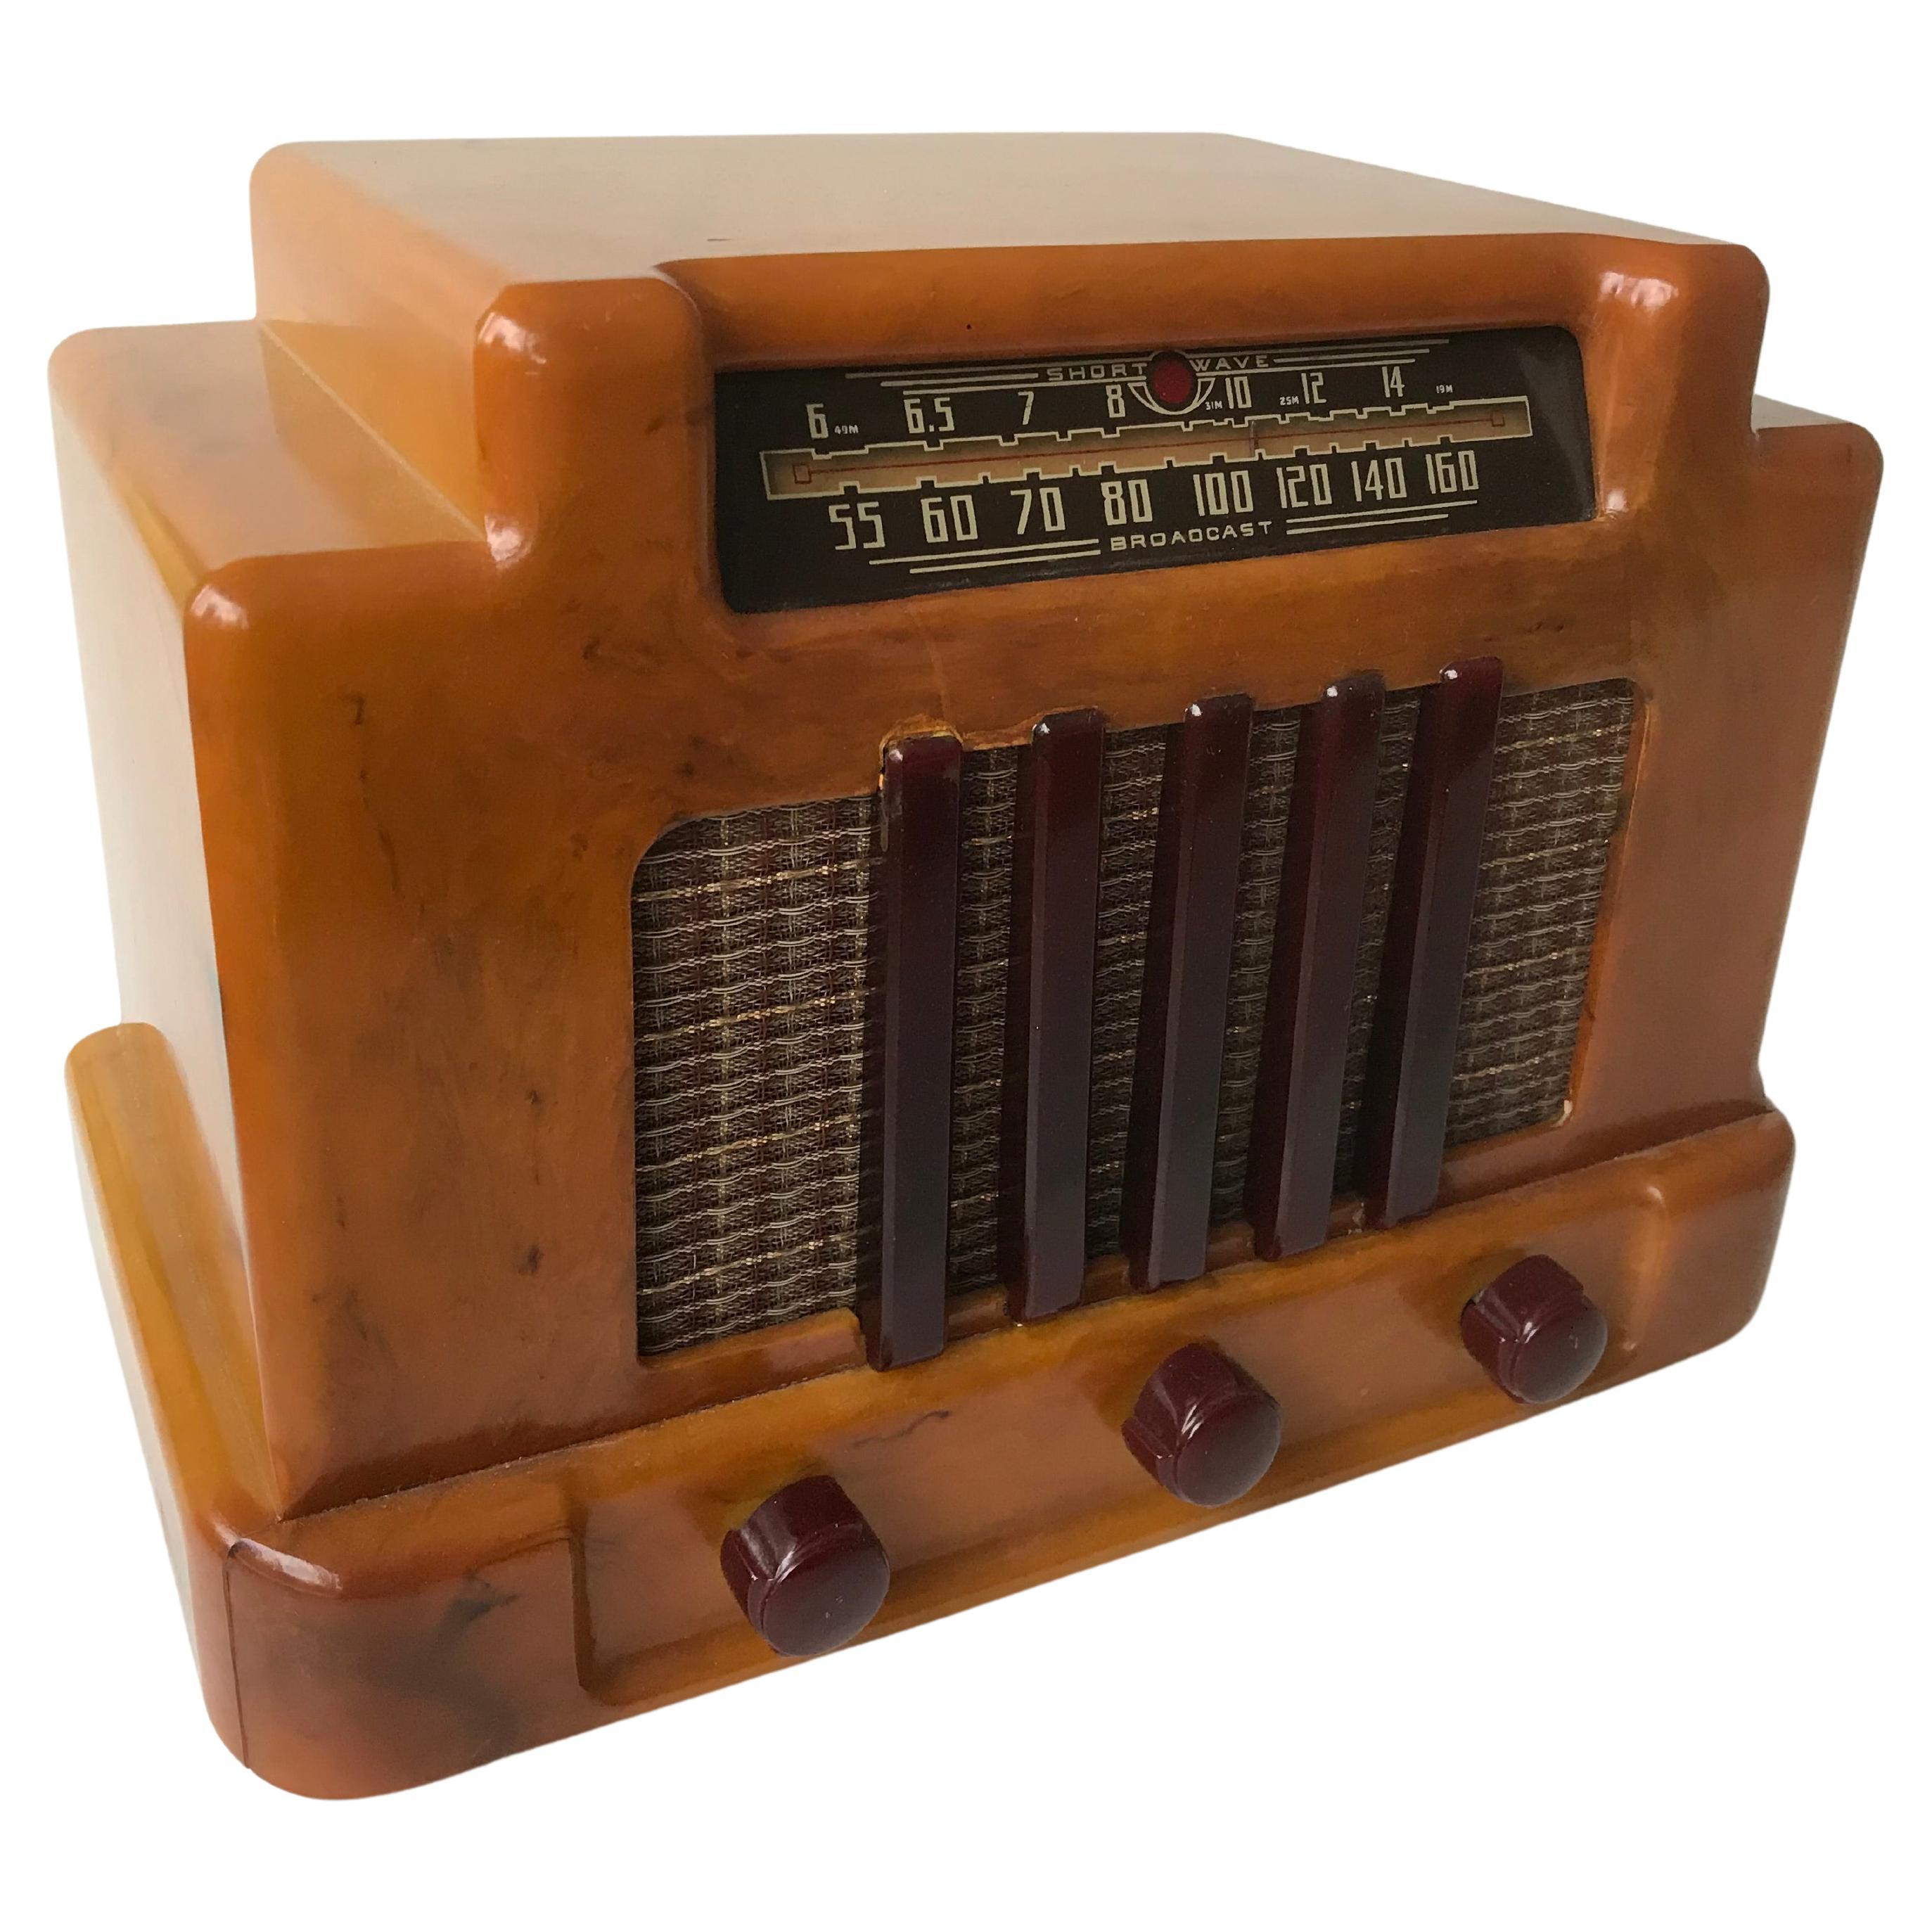 Addison Modell 5 Butterscotch und Maroon Catalin Tube Radio, 1940